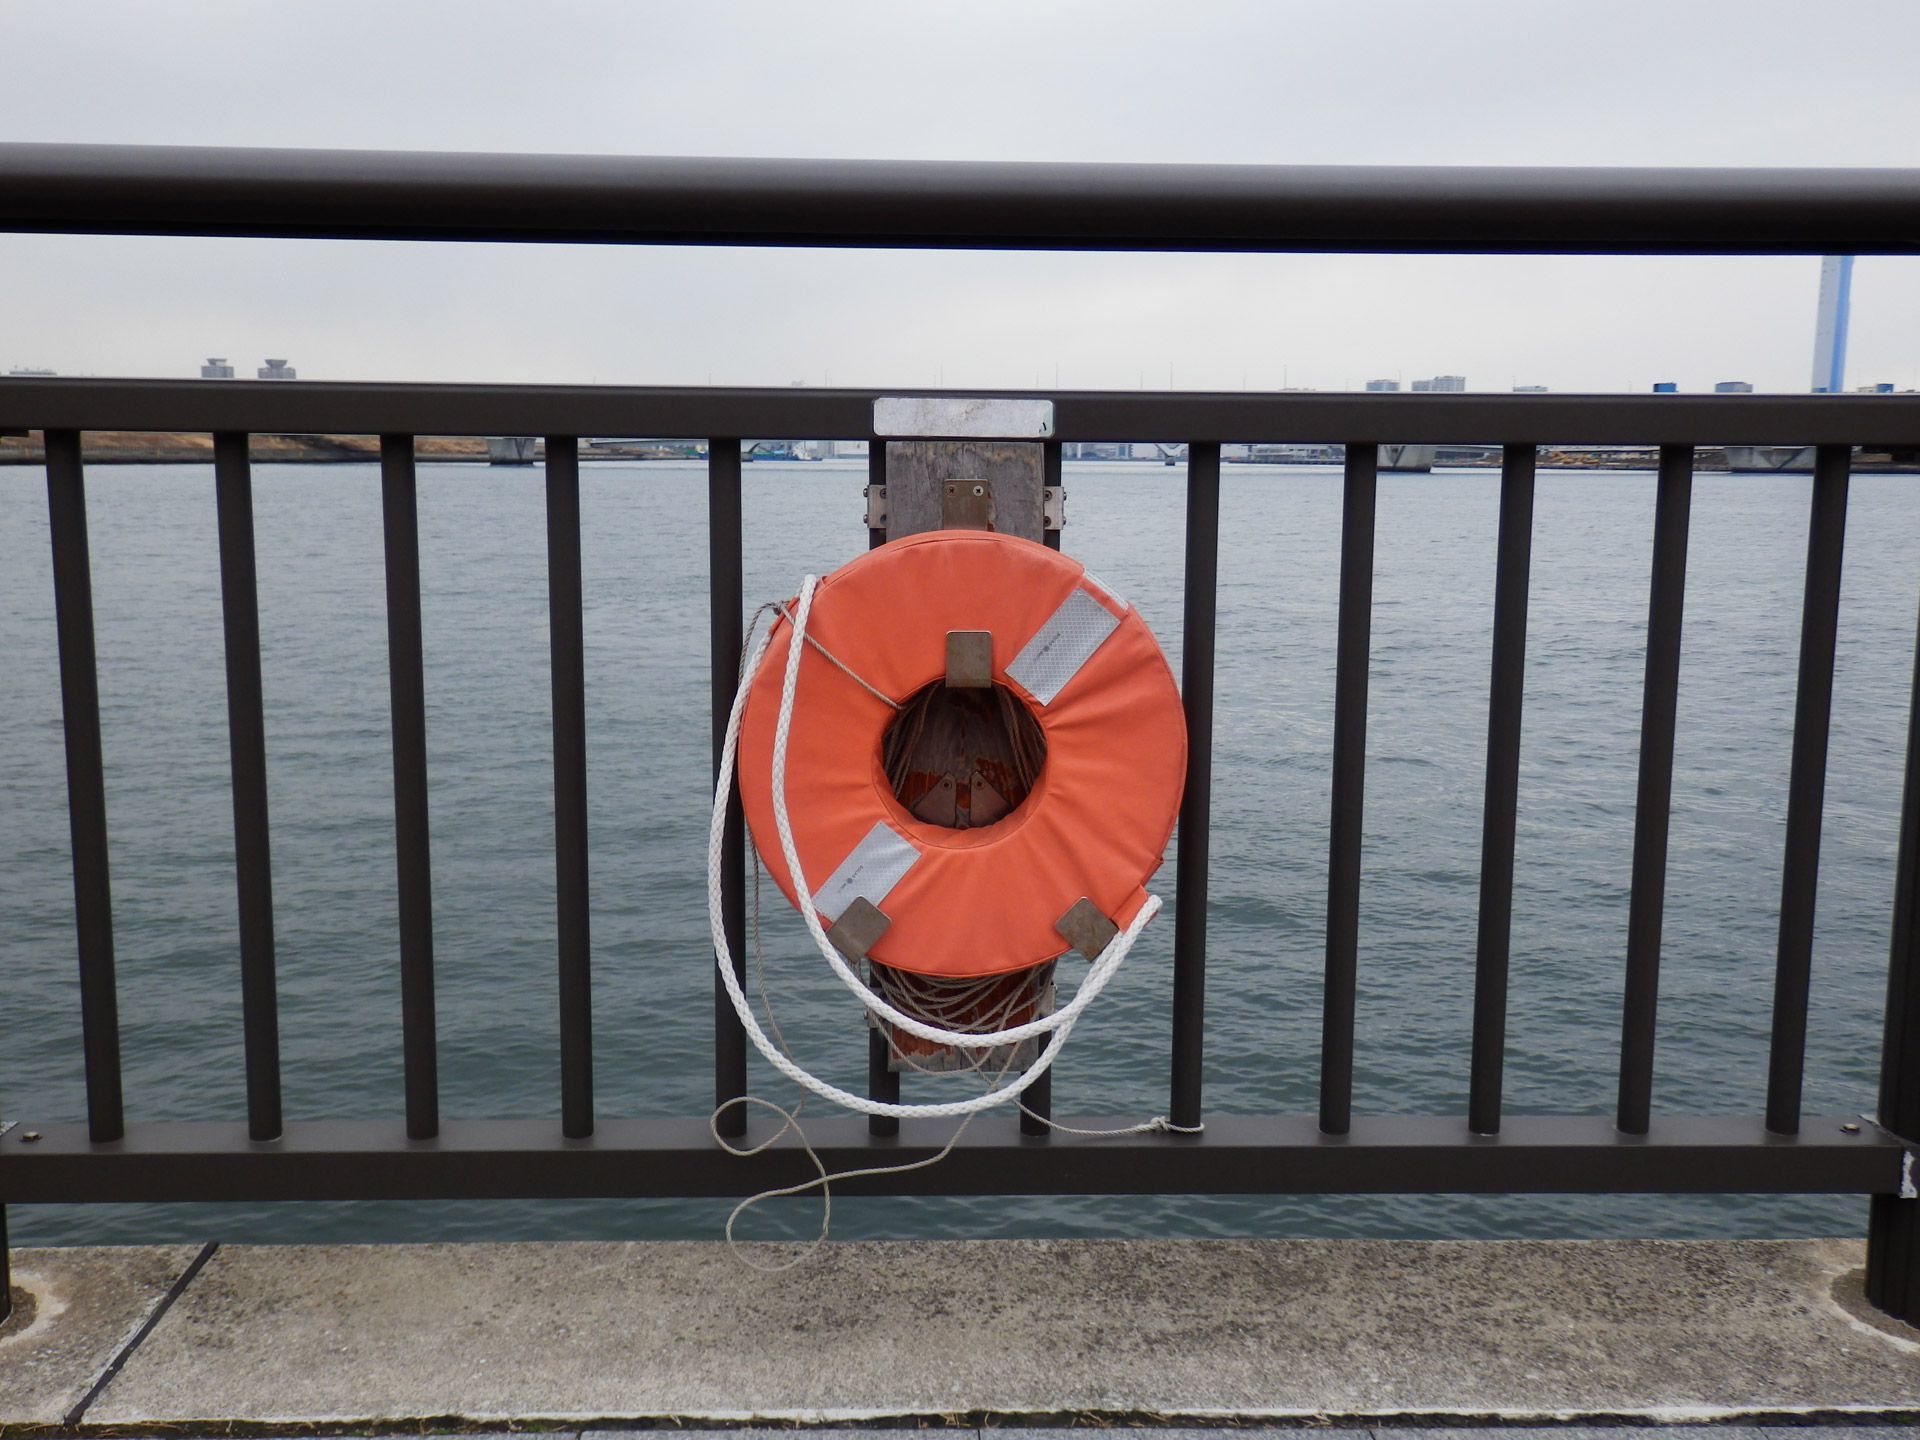 Lifebuoy,ring buoy,lifering,lifesaver,life preserver - free image from ...